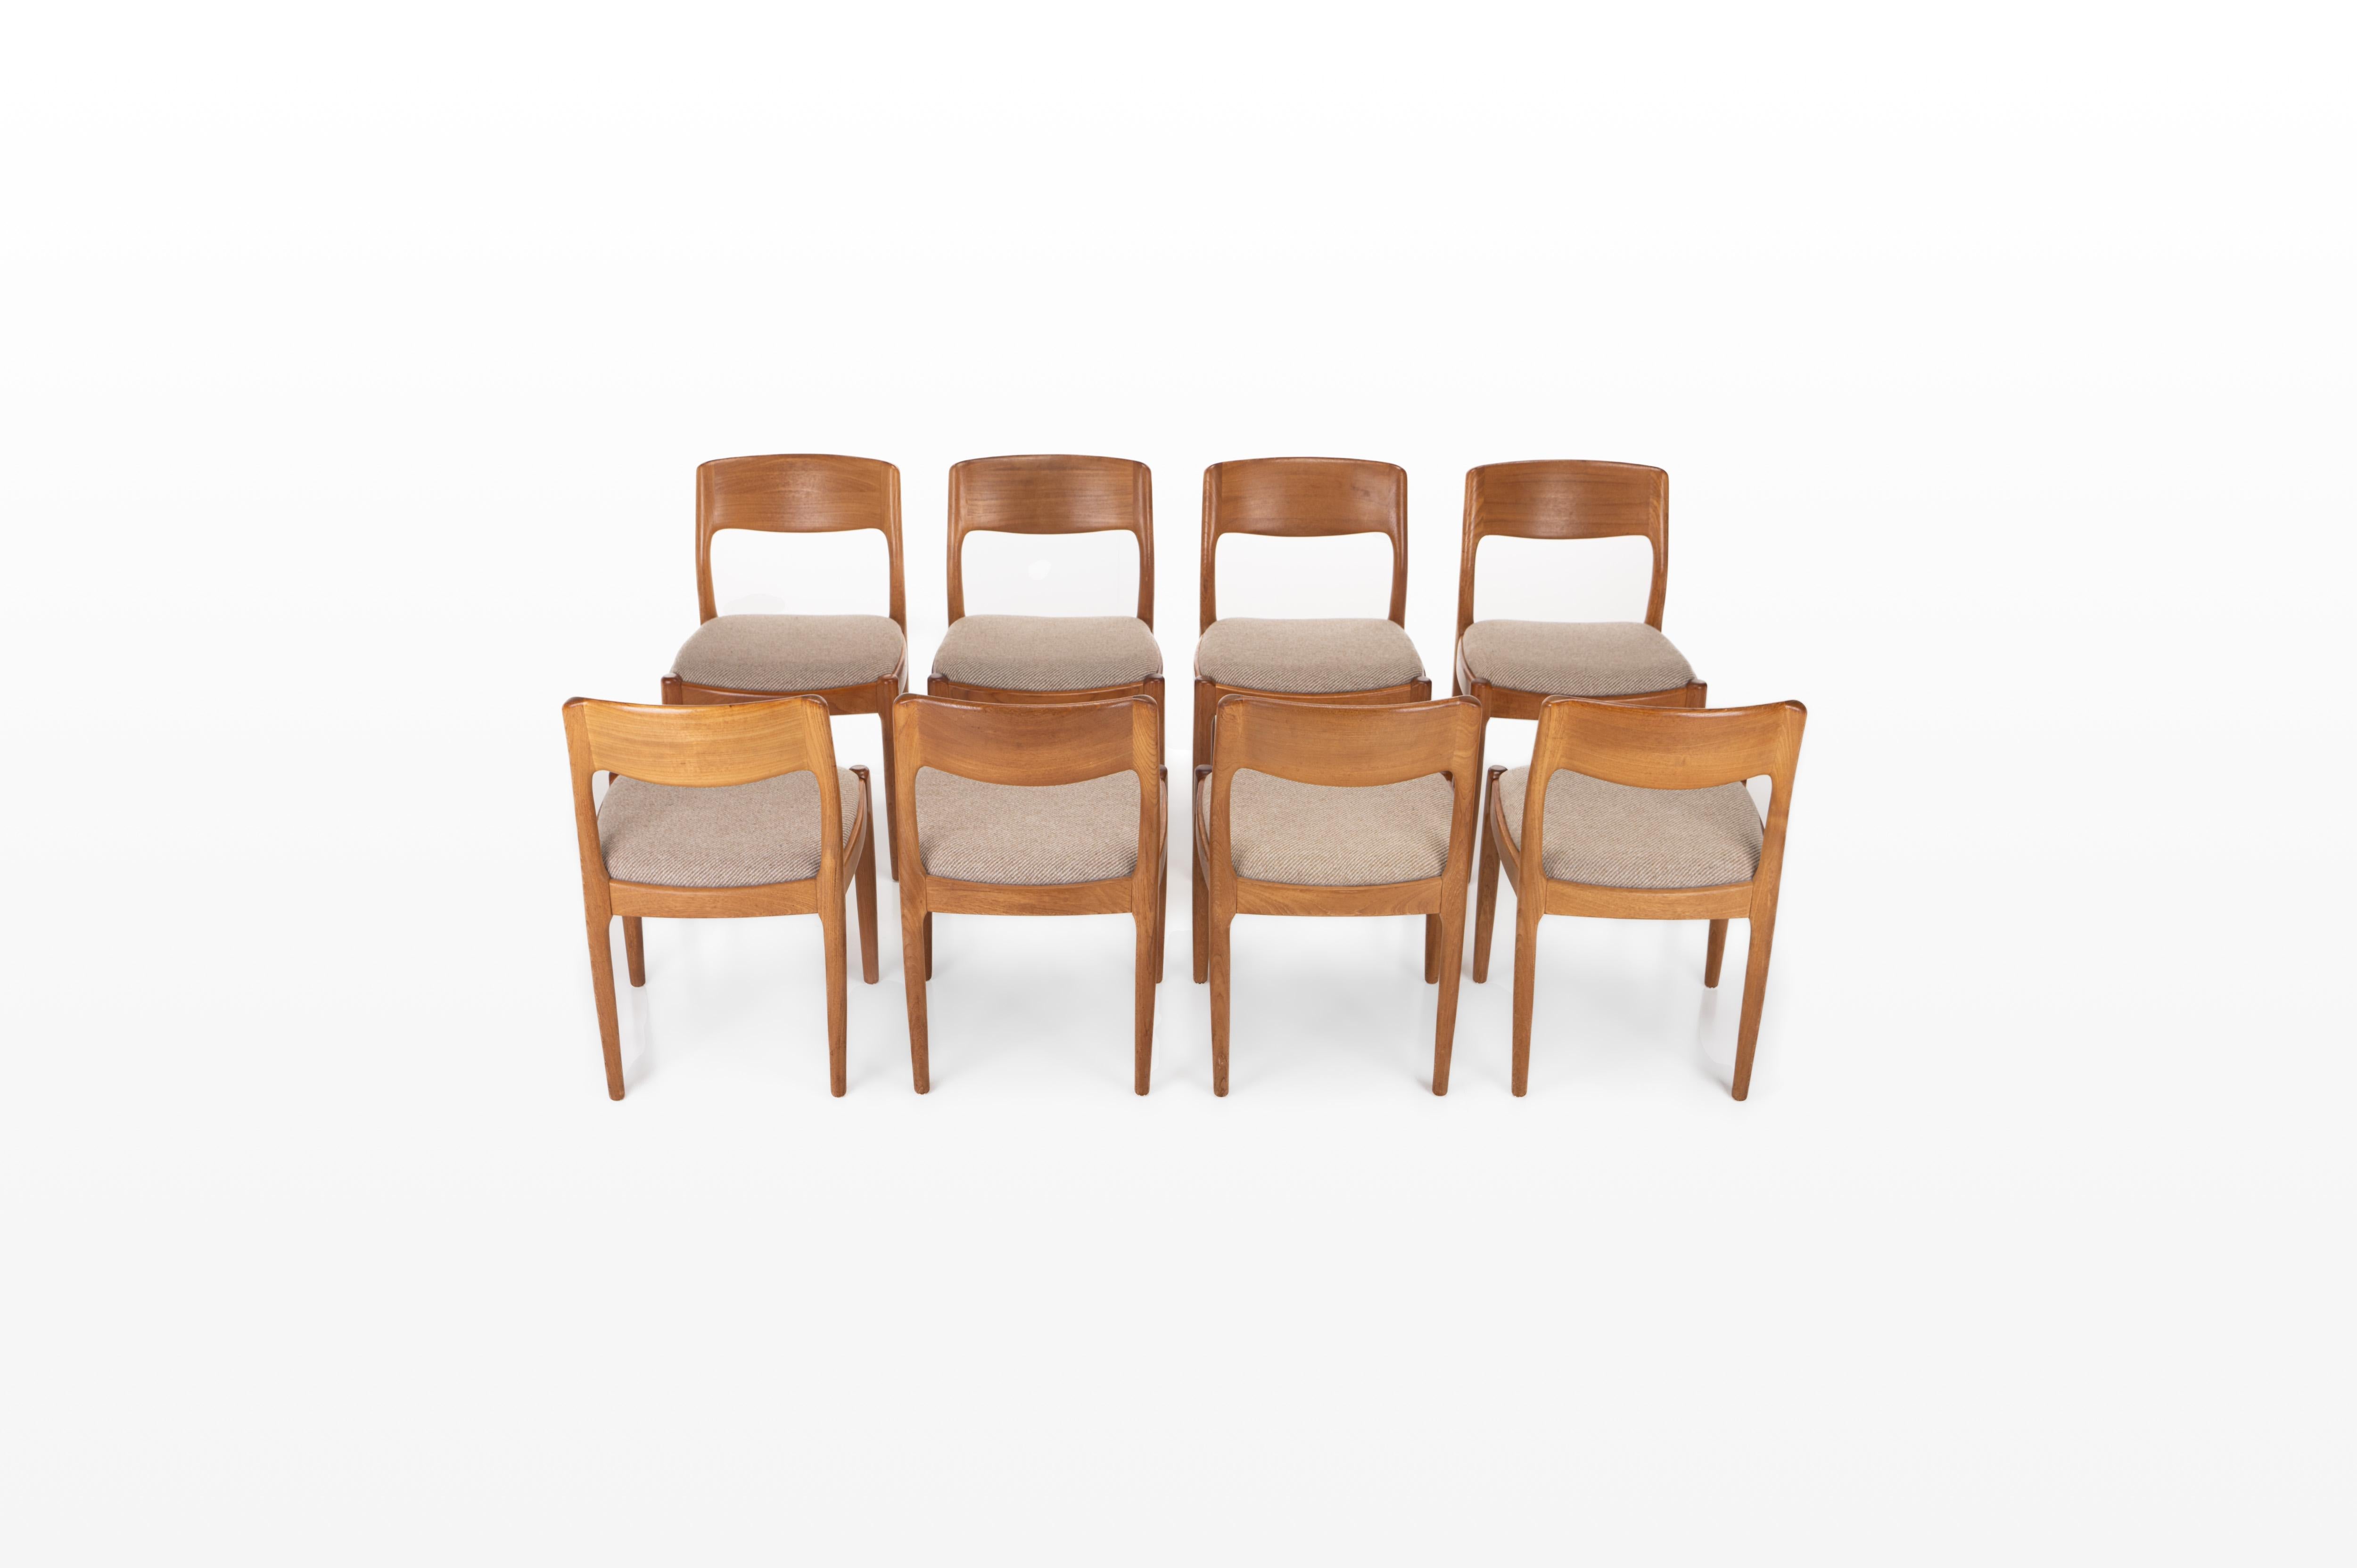 Set of eight teak dining chairs designed by Juul Kristensen for JK Denmark. Beautifully designed teak frame with a cream beige upholstery.
